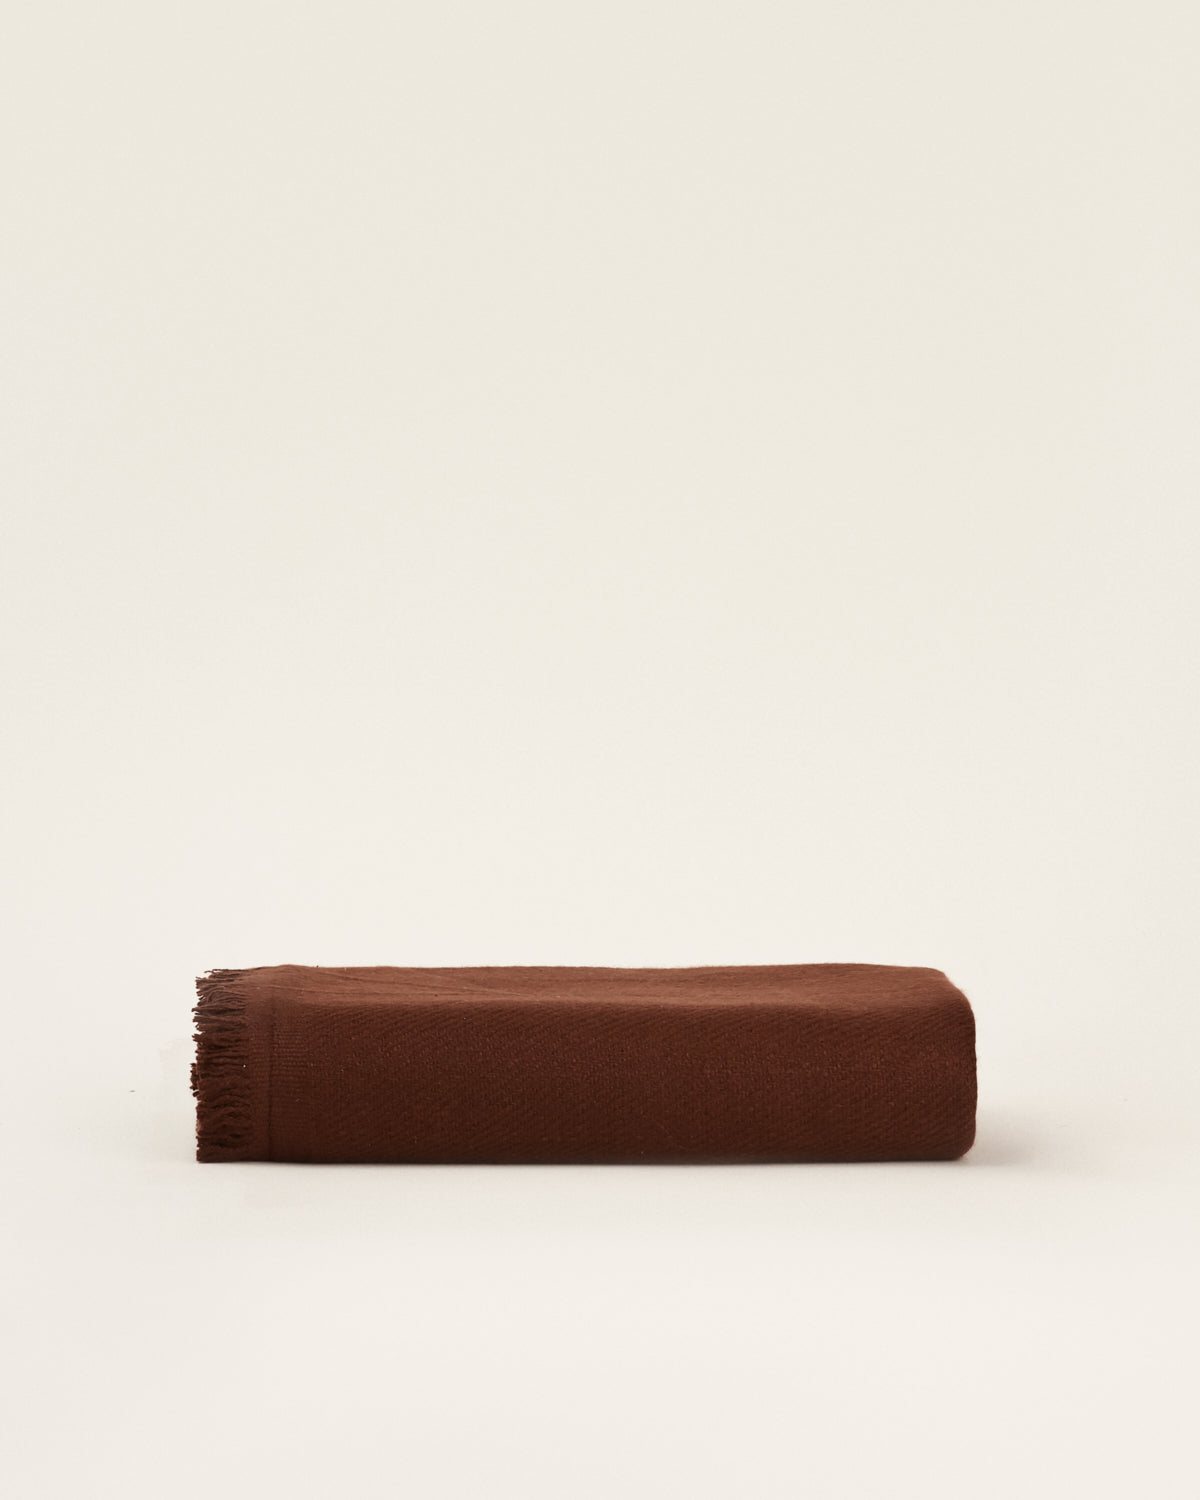 Chocolate brown cashmere blanket